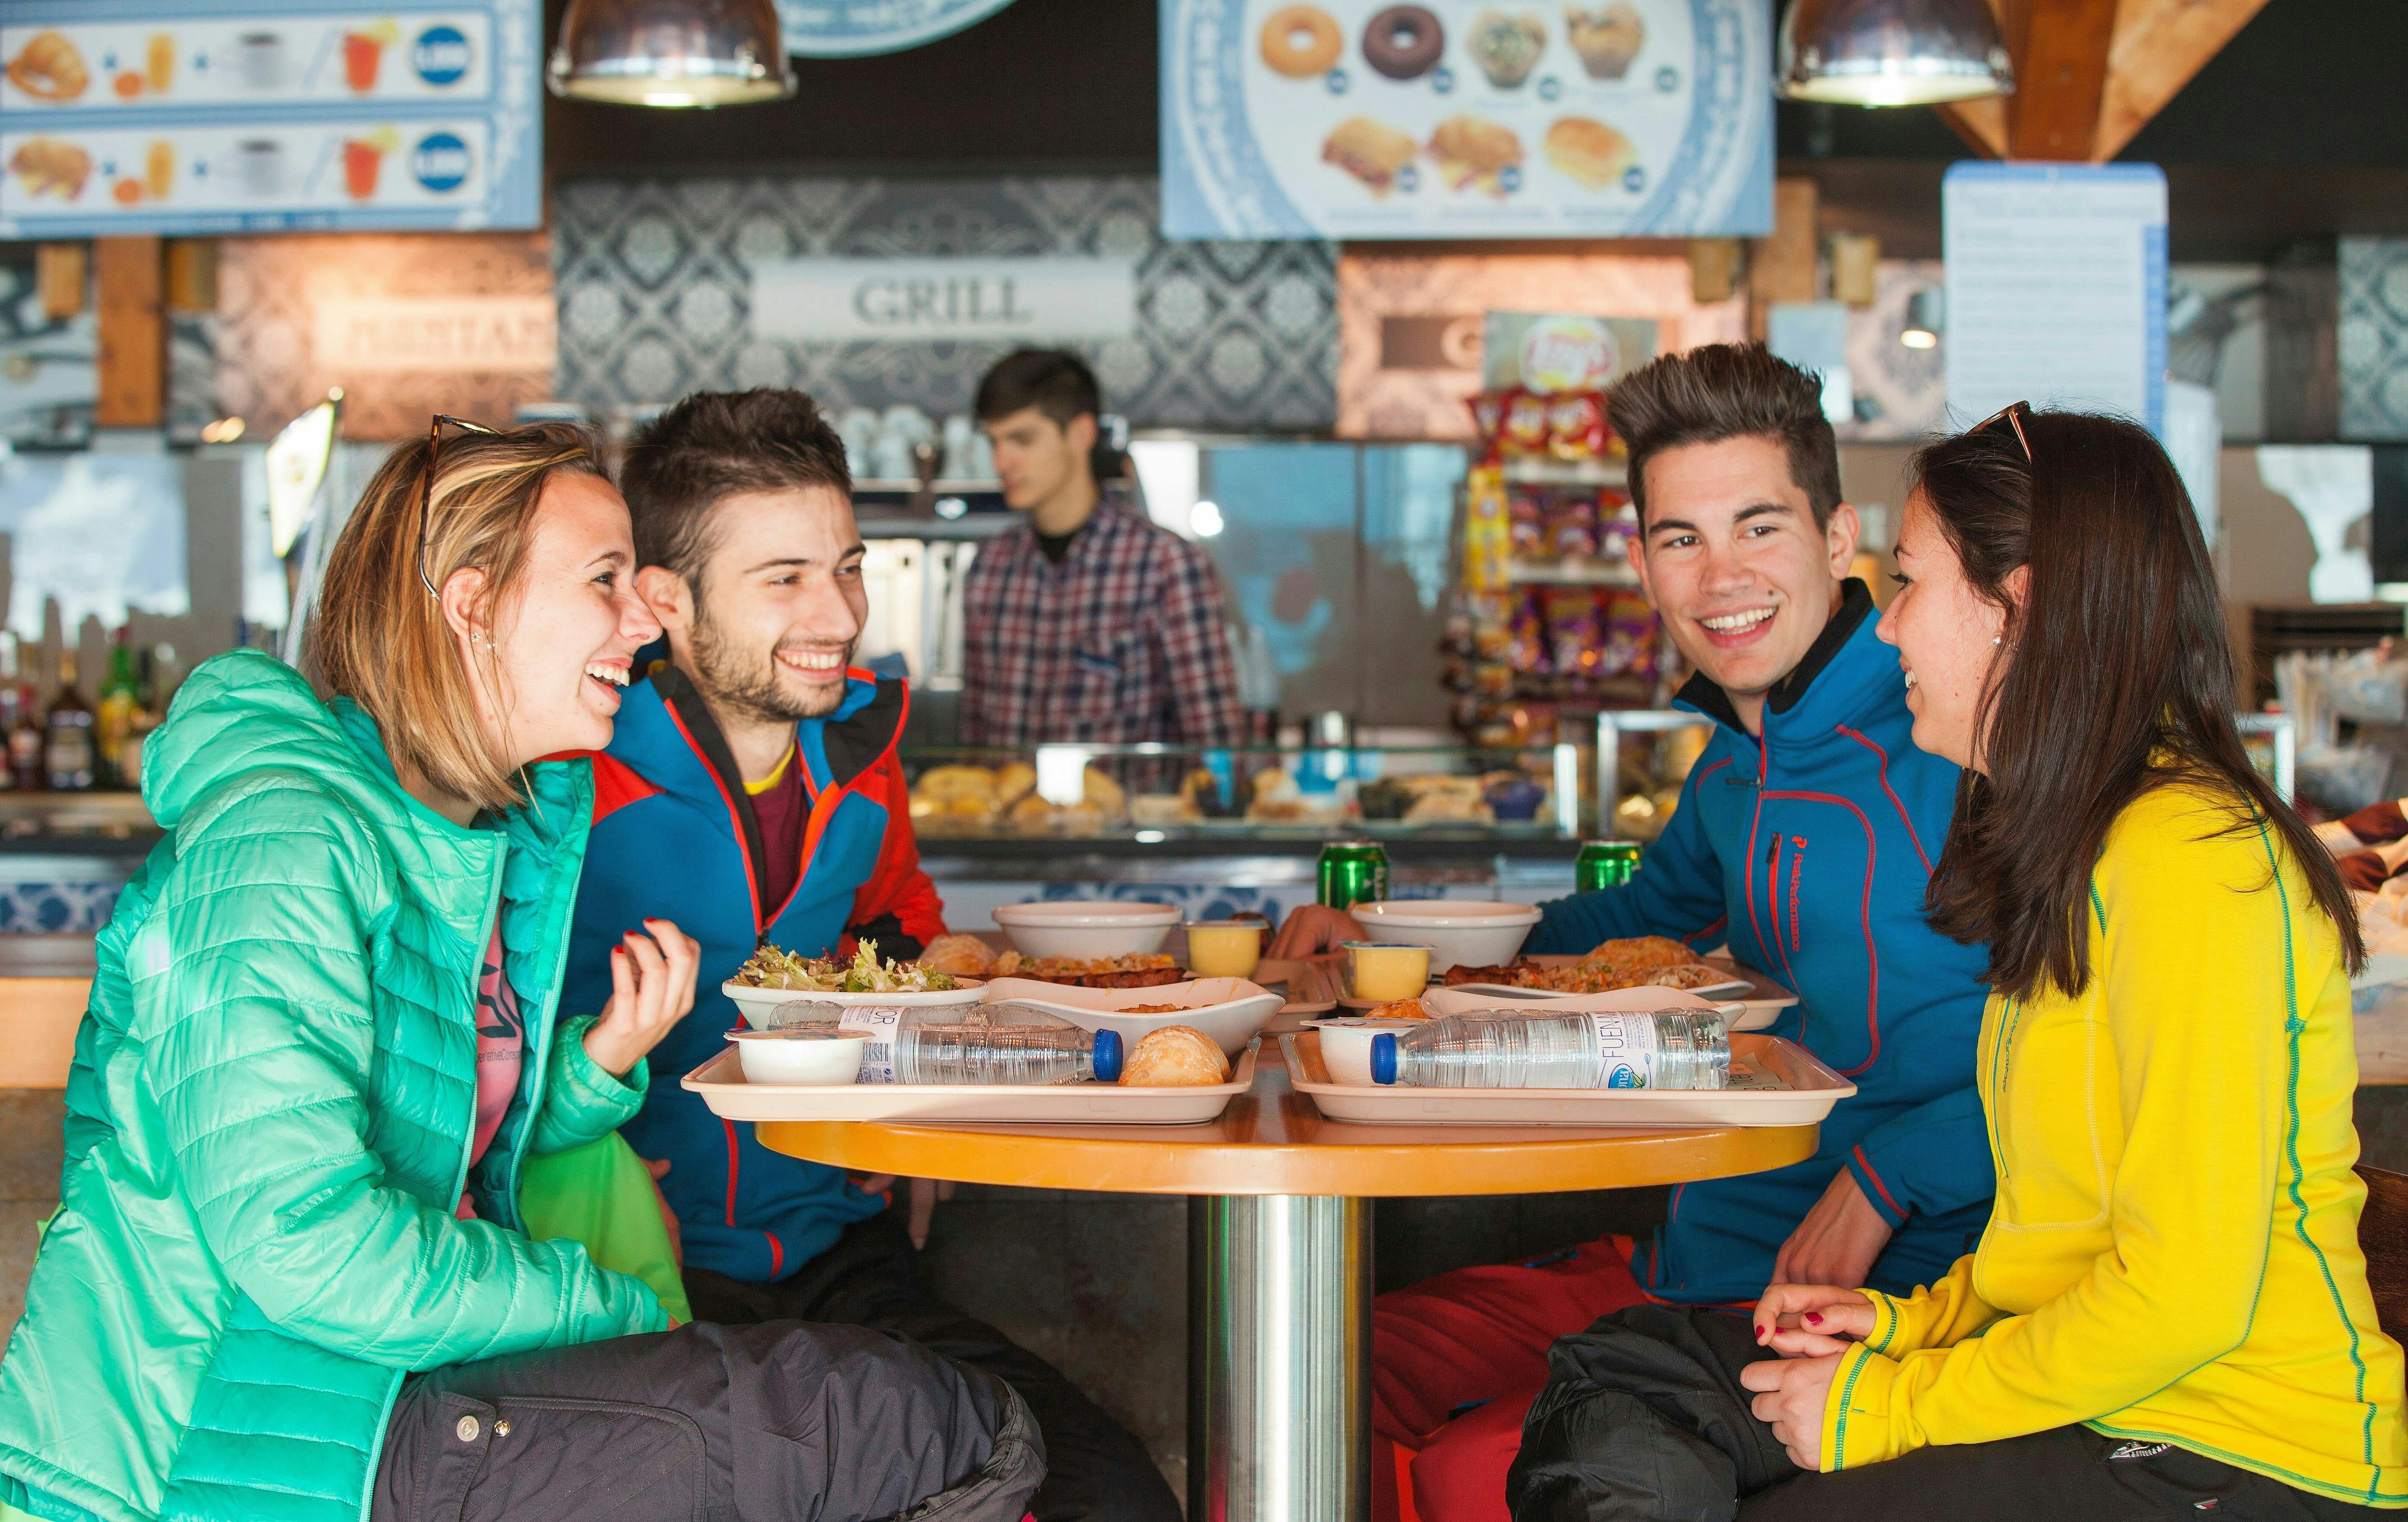 Lunch at Grandvalira Ski Resort Restaurants